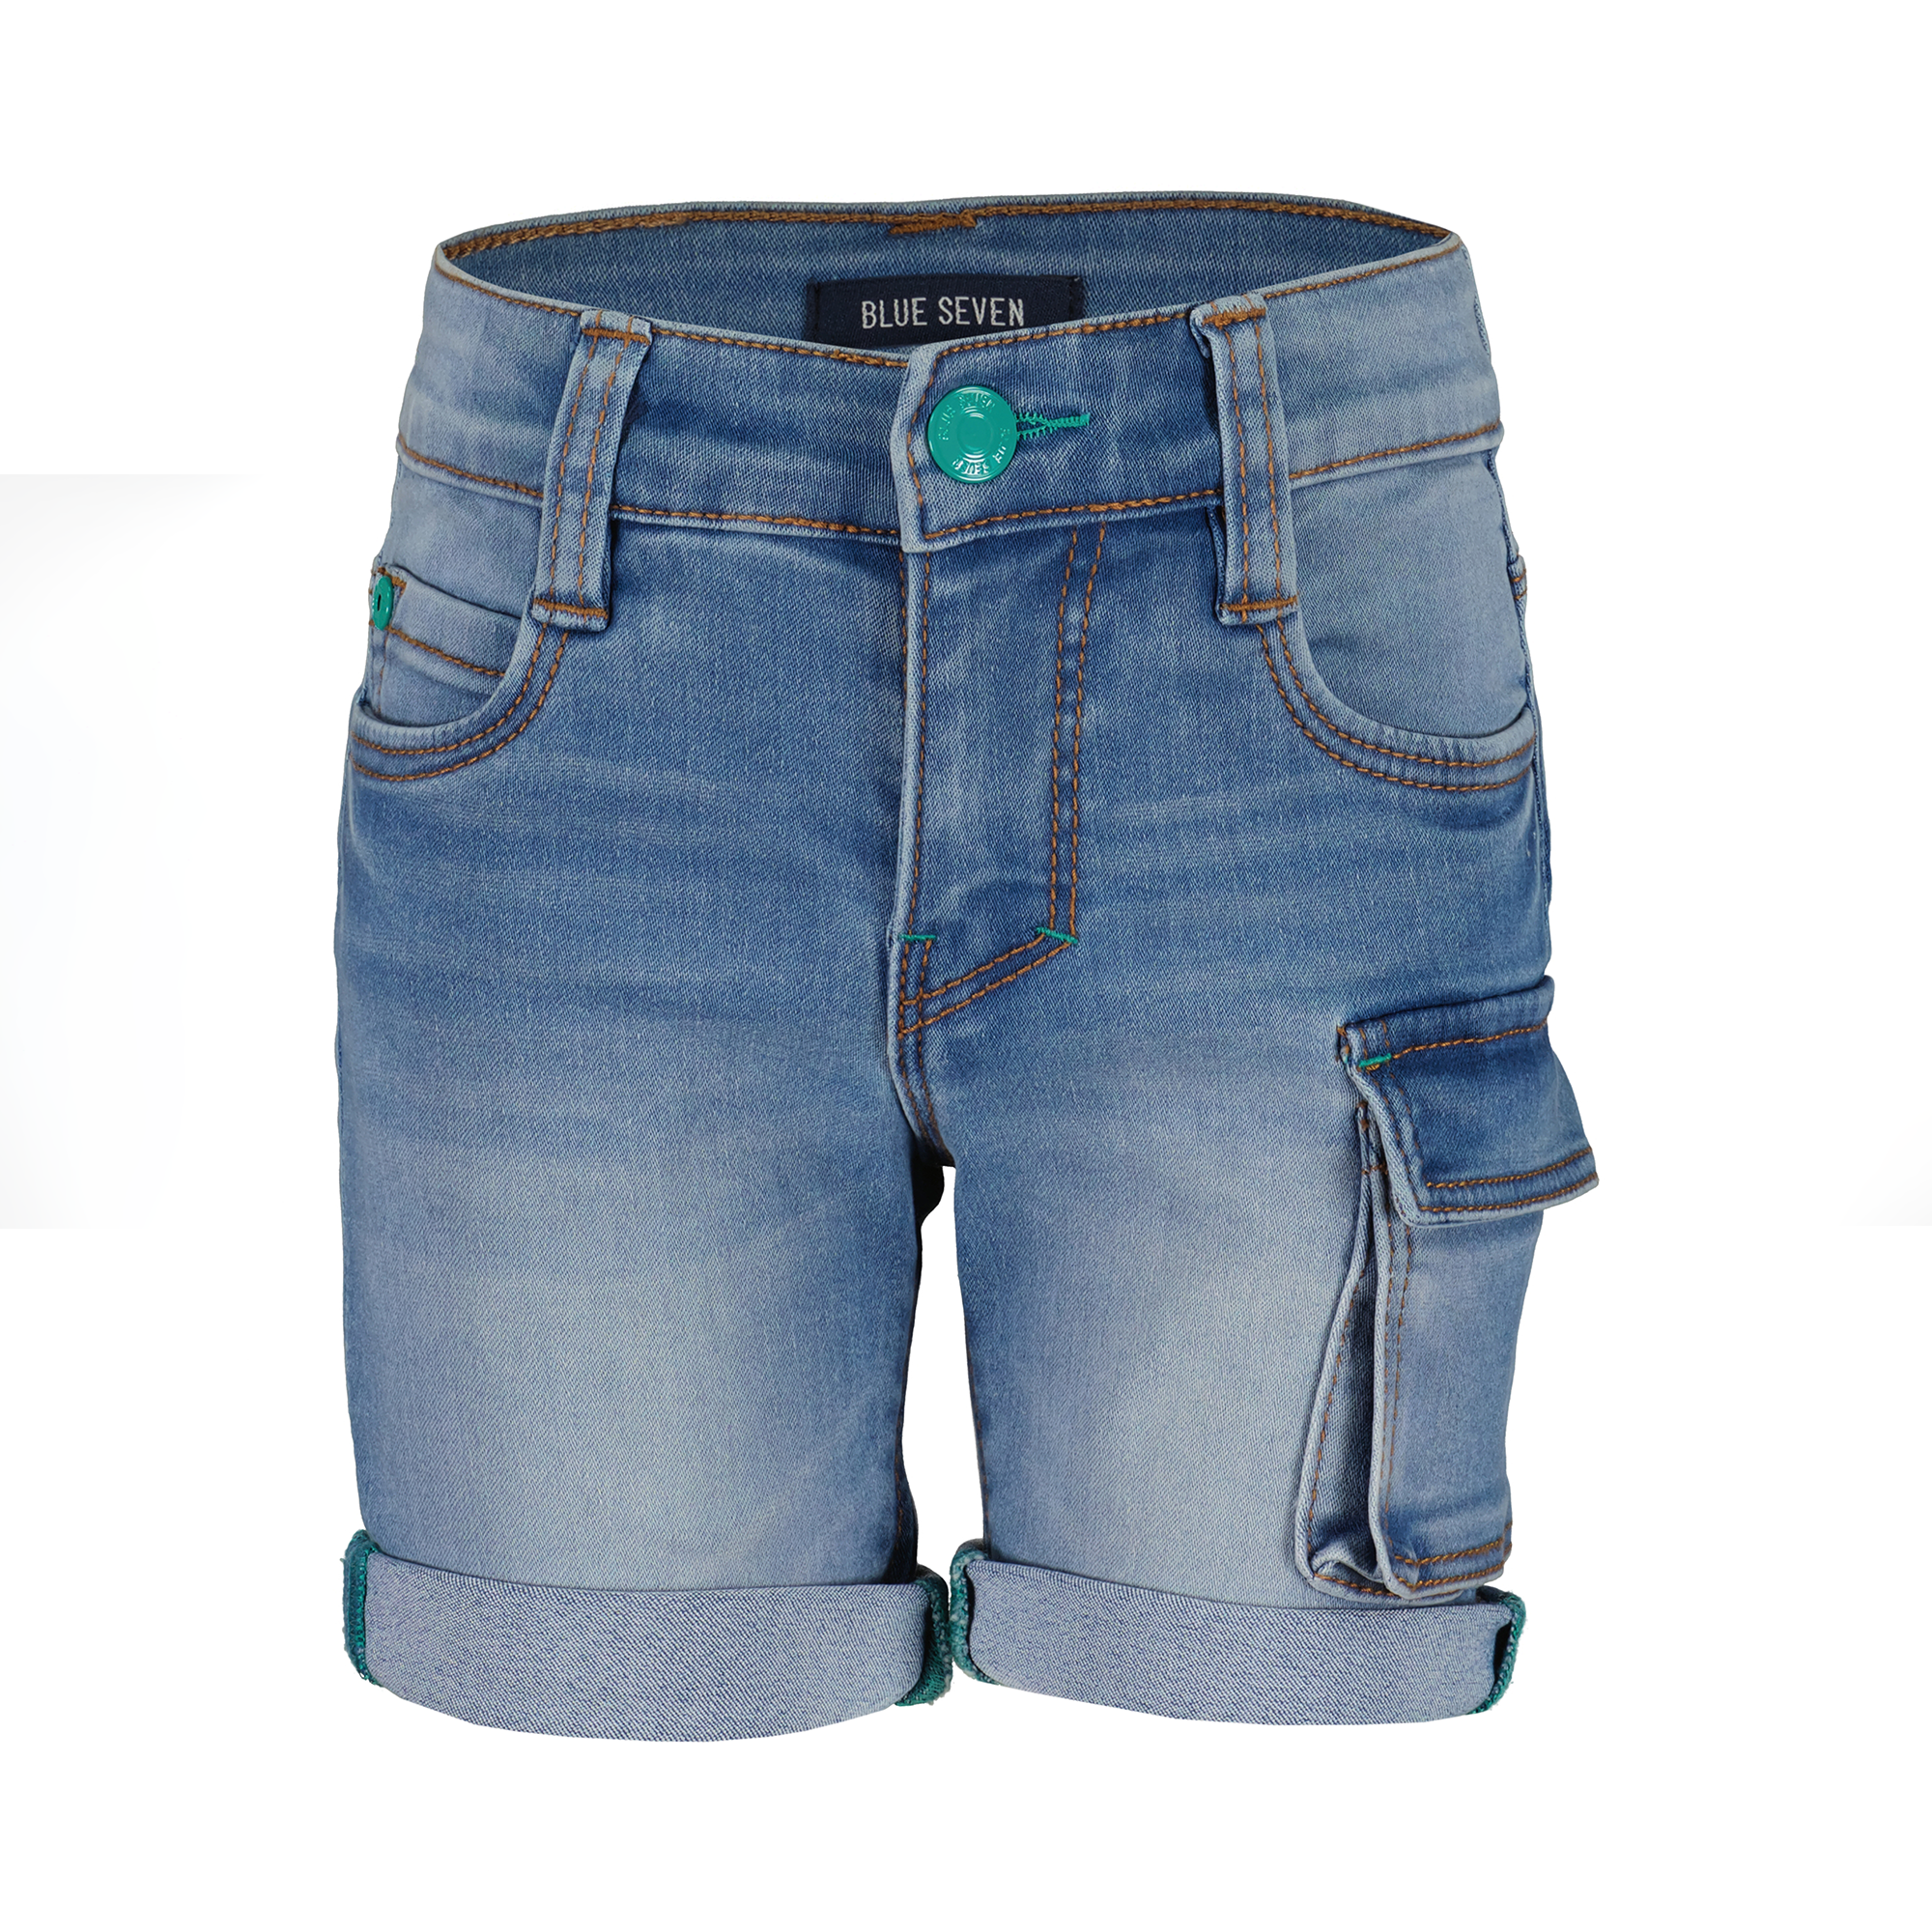 Jeans-Shorts Marine blue seven Blau M2000586241505 1